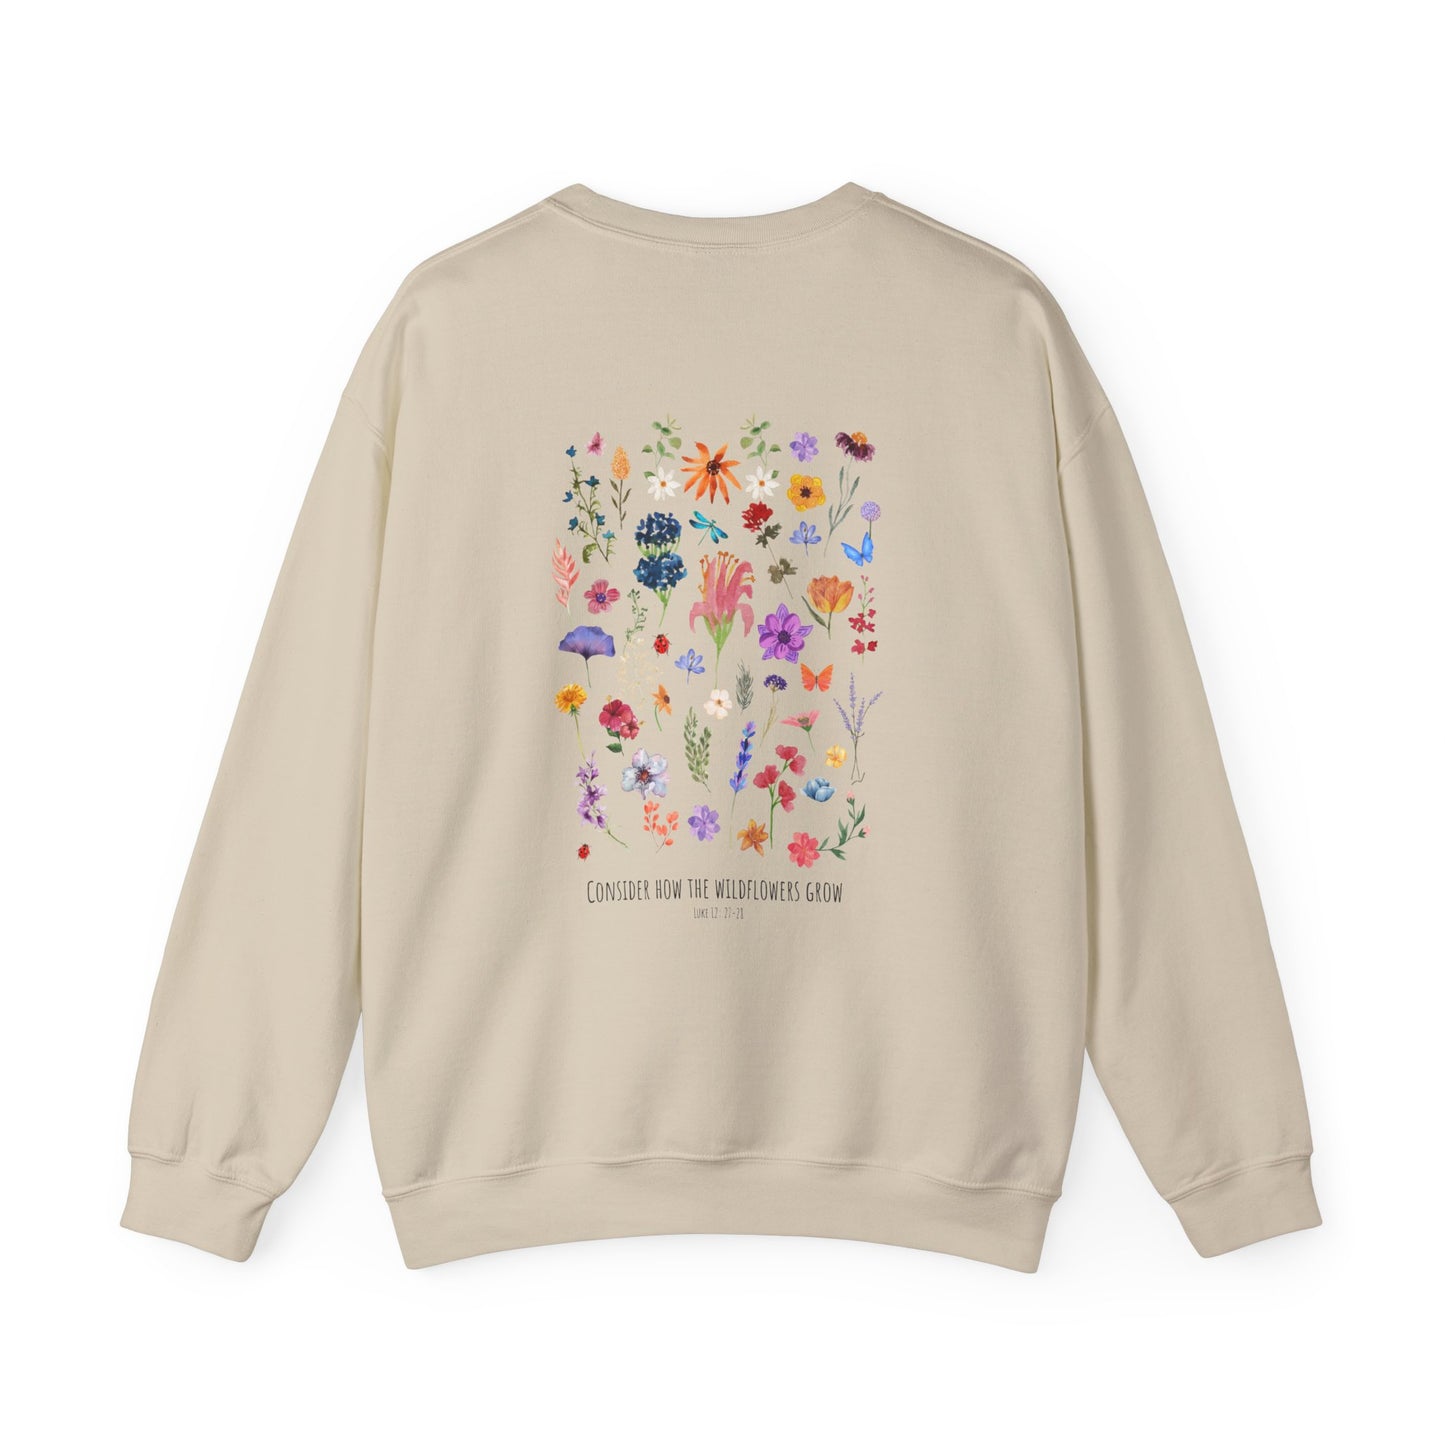 Consider How to Wildflowers Grow Crew Neck Sweatshirt